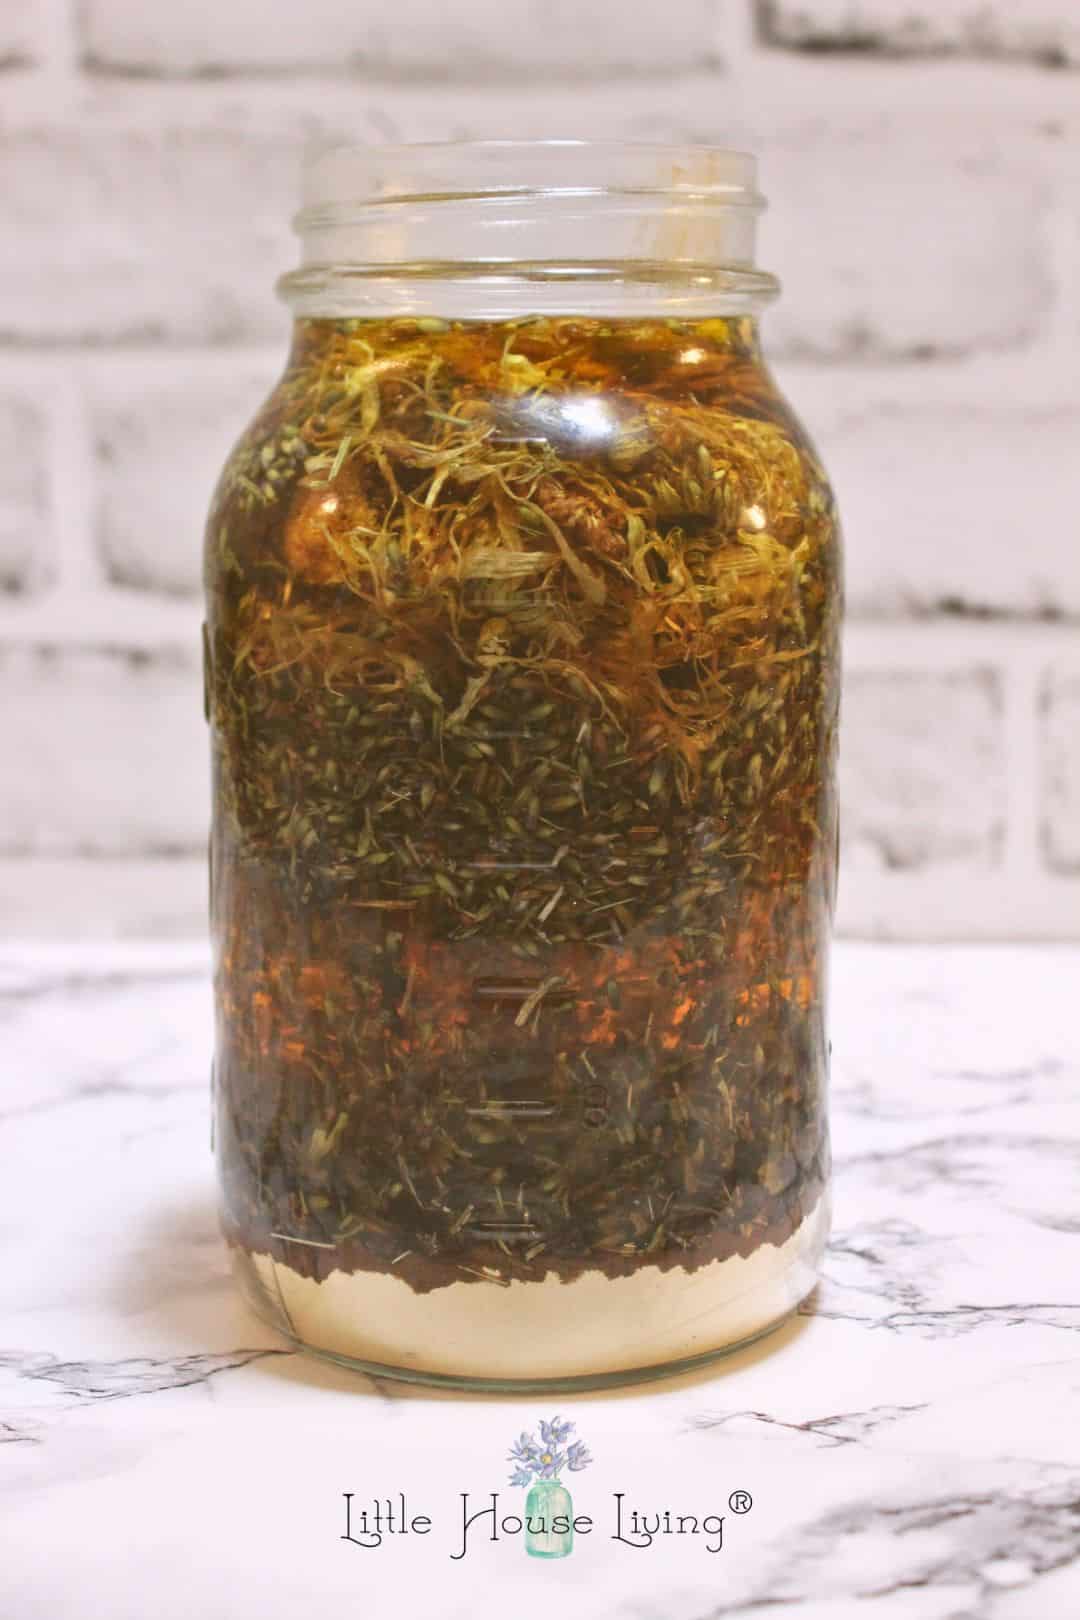 Avocado oil on glass jar with aloe vera powder, comfrey leaves, lavender, and calendula.